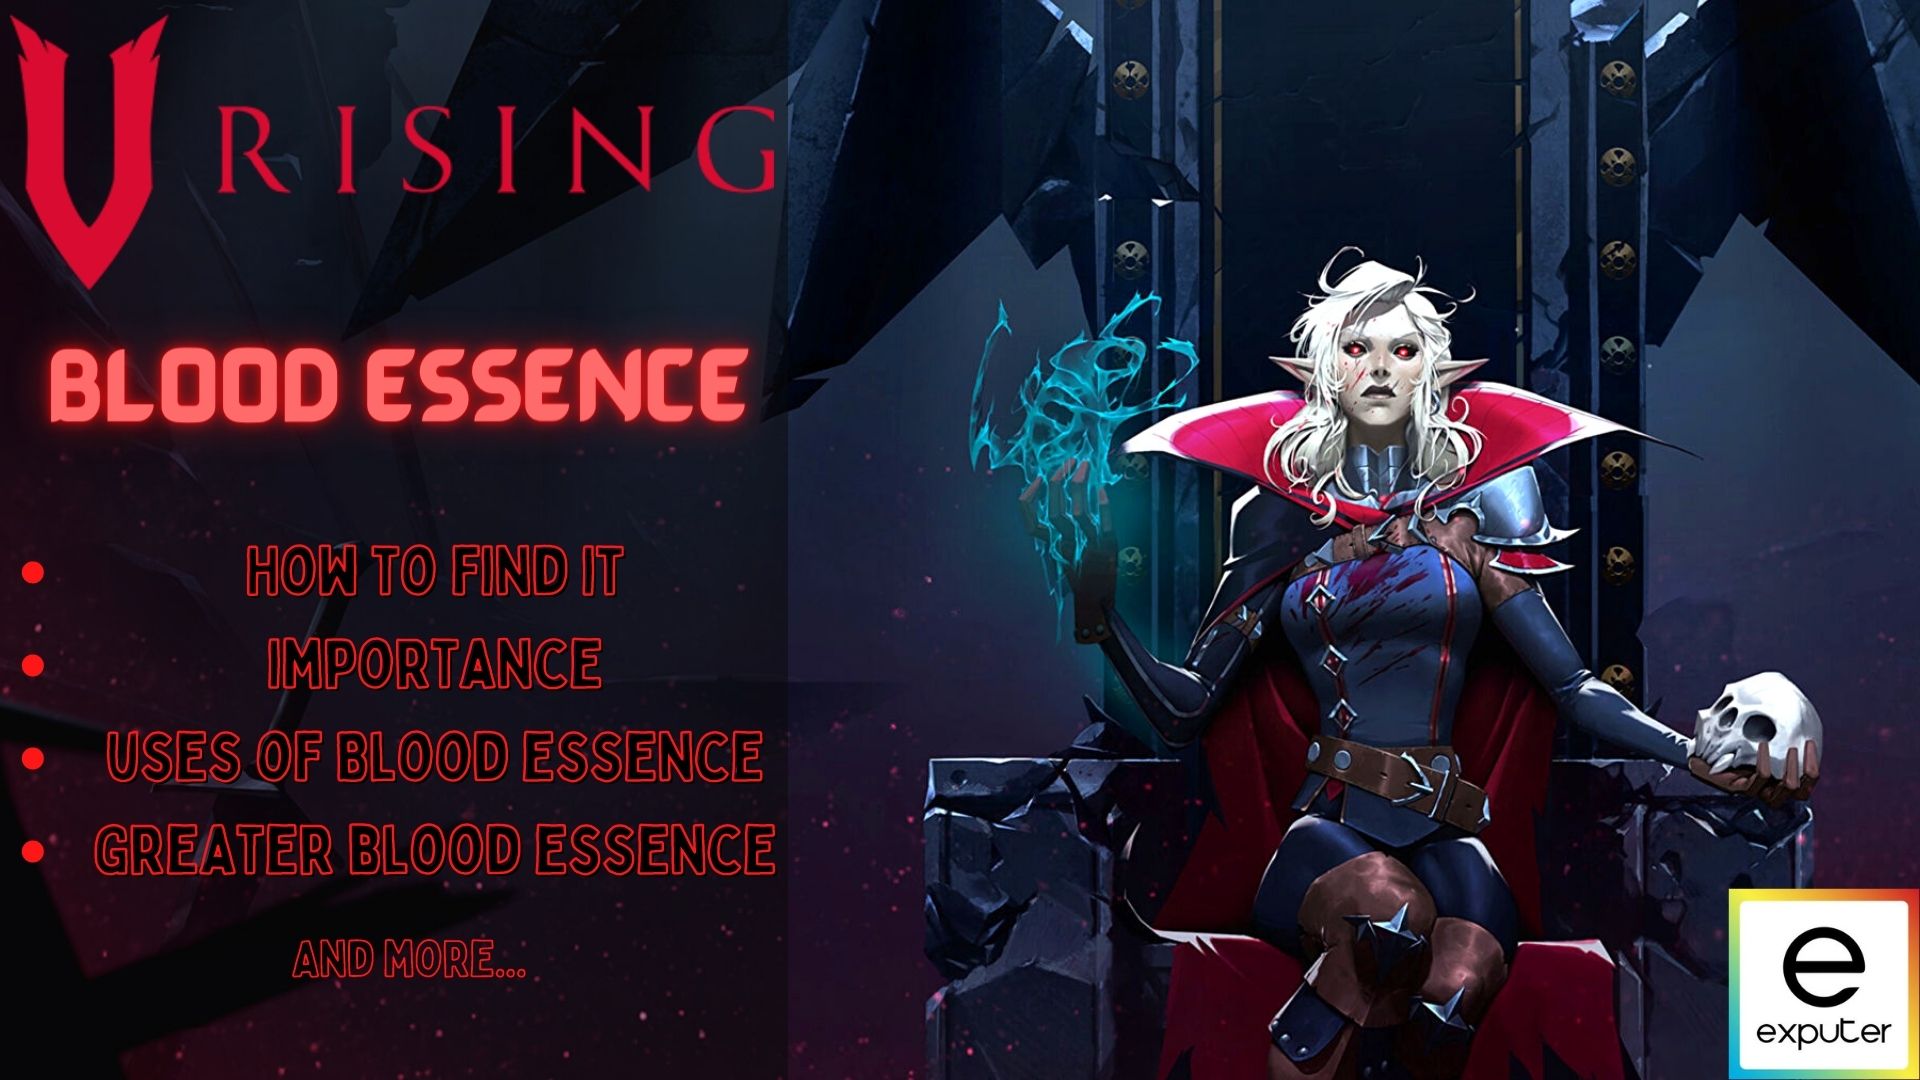 V Rising Blood essence